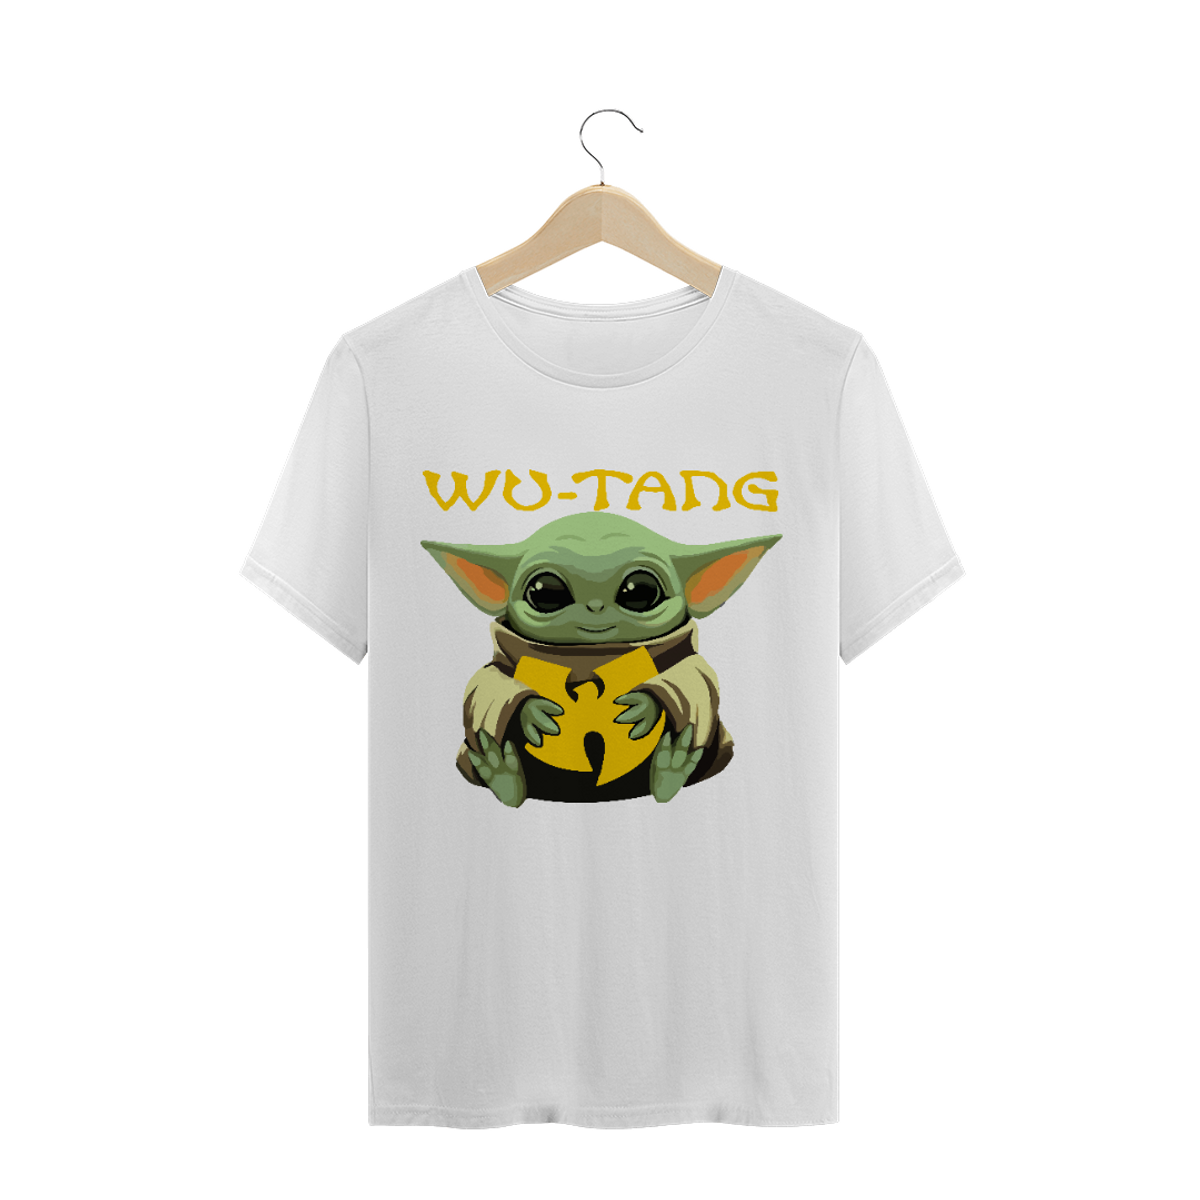 Nome do produto: Camiseta de Malha Quality Wu Tang Clan Baby Yoda